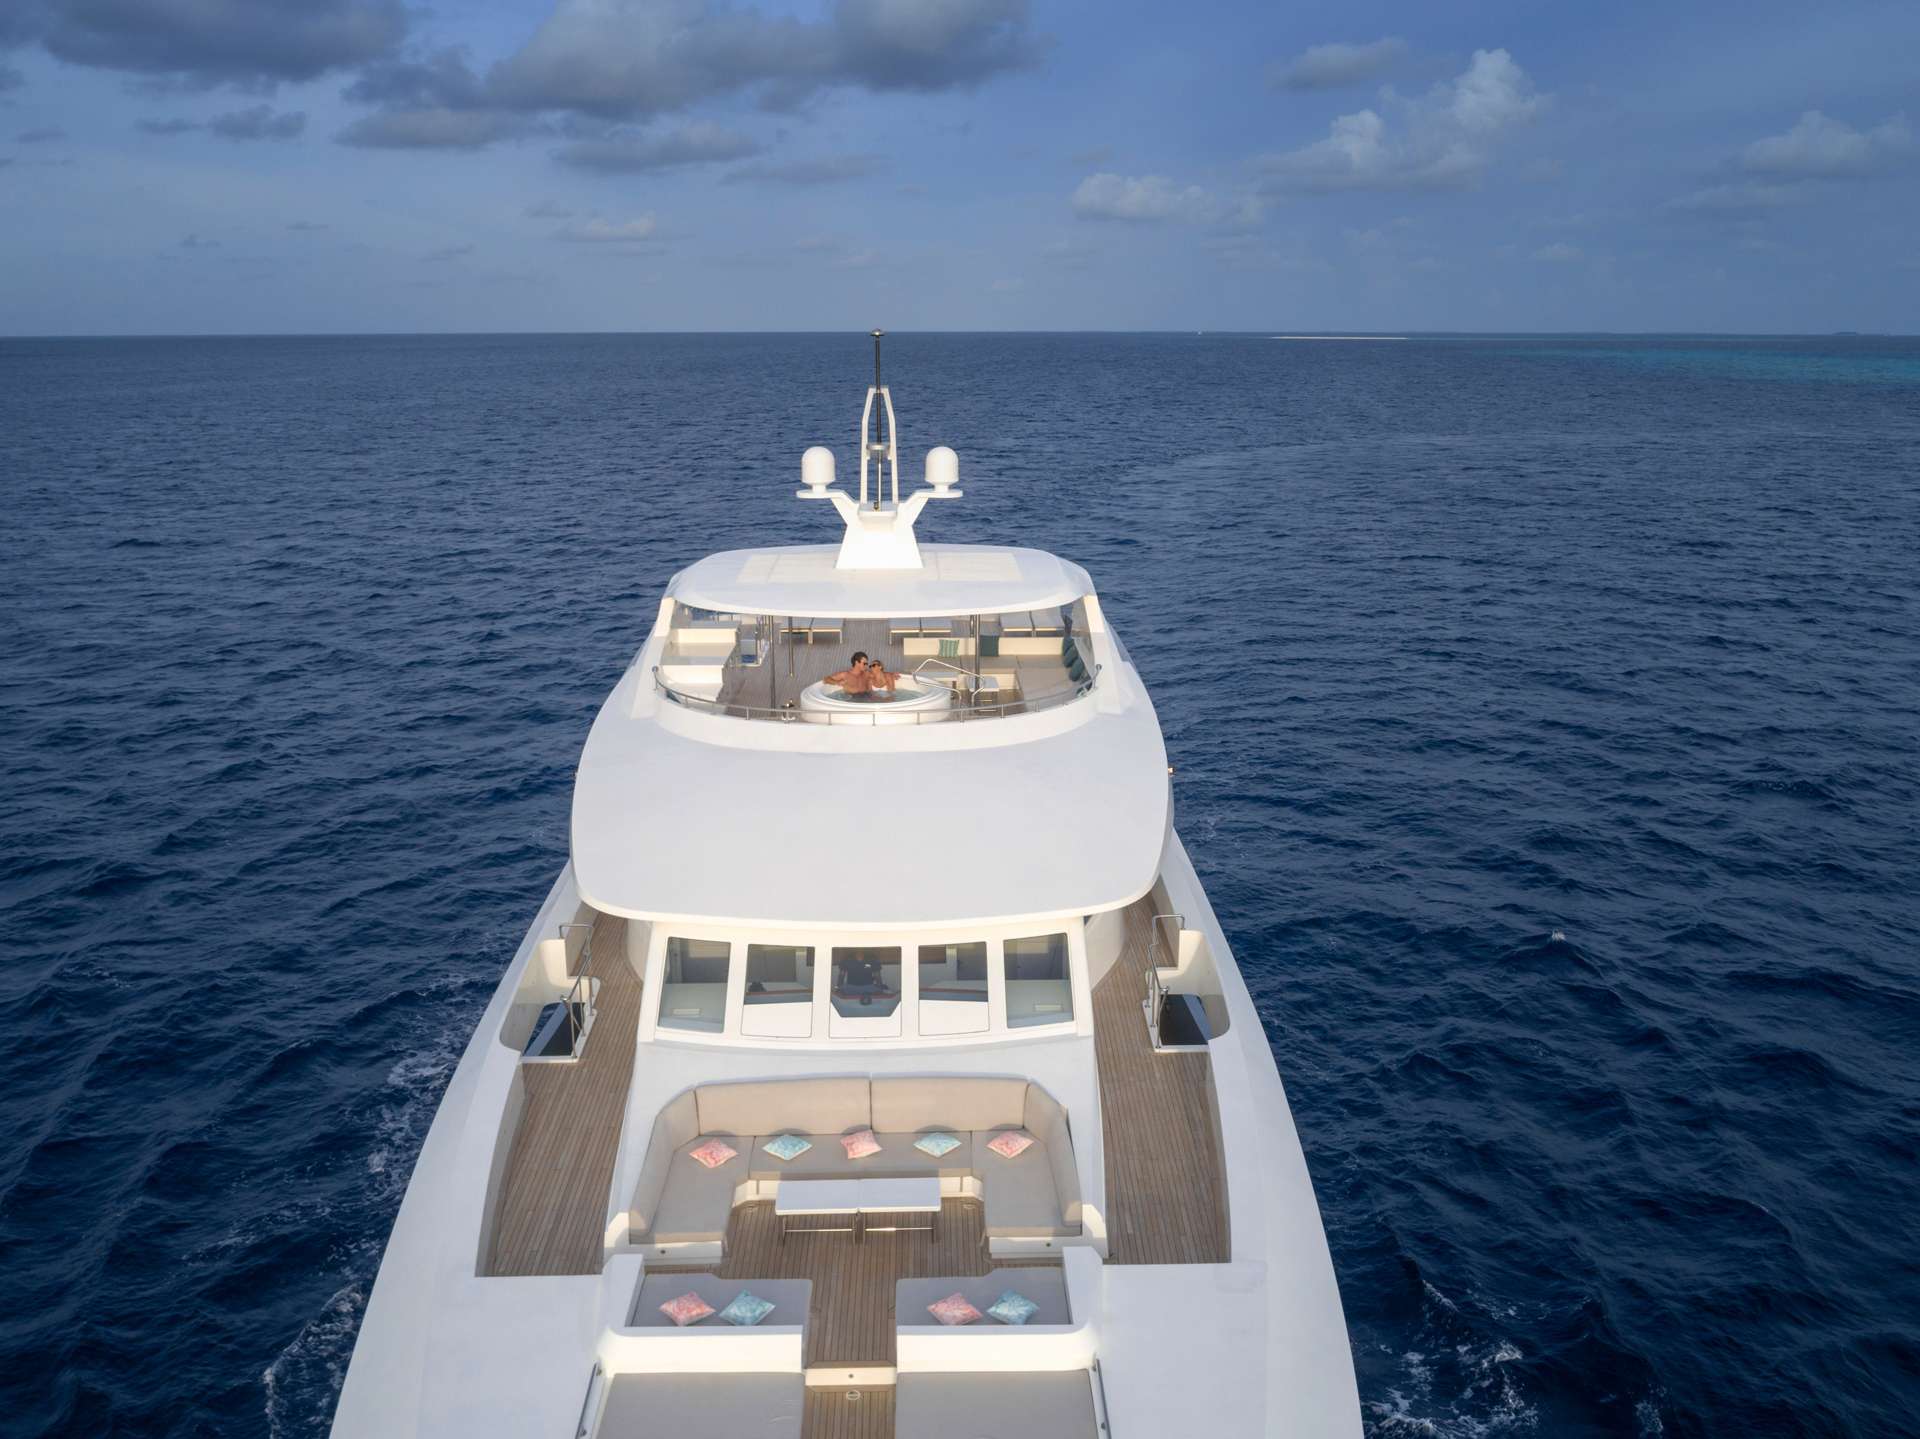 Motor Yacht 'SEAREX', 12 PAX, 14 Crew, 127.00 Ft, 39.00 Meters, Built 2018, .